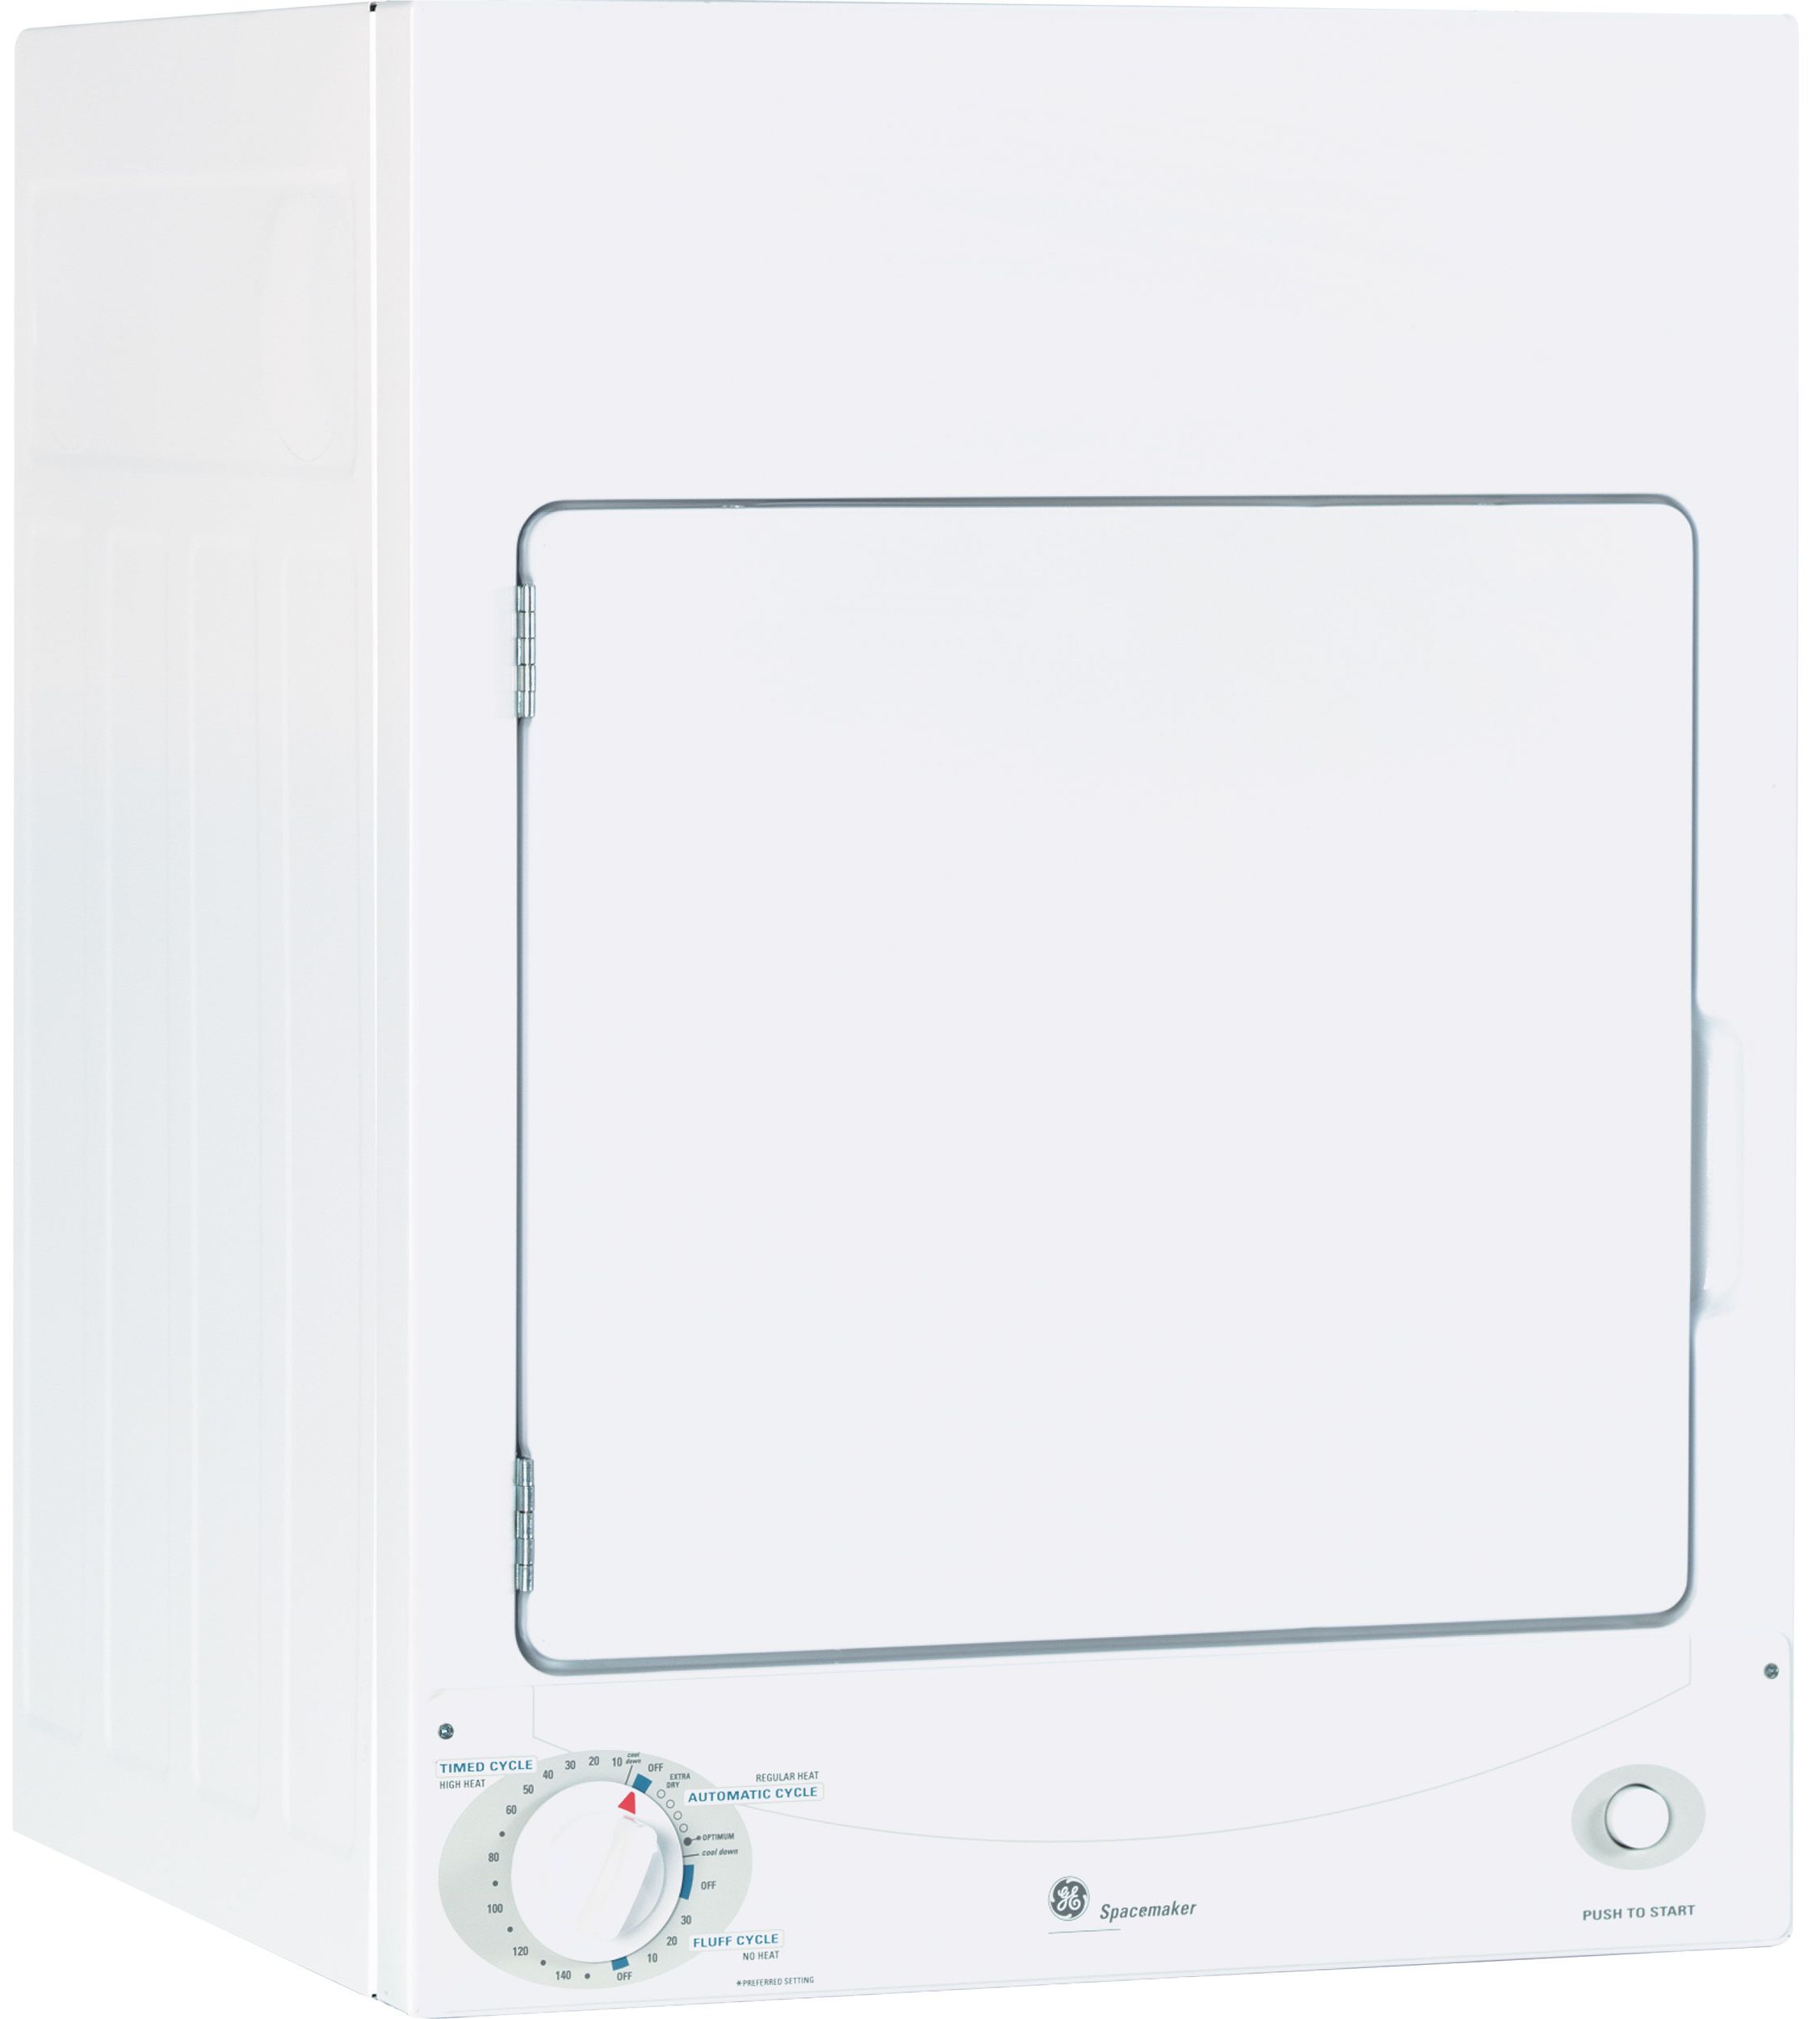 GE® Spacemaker® 3.6 Cu. Ft. White Front Load Electric Dryer-DSKS333ECWW